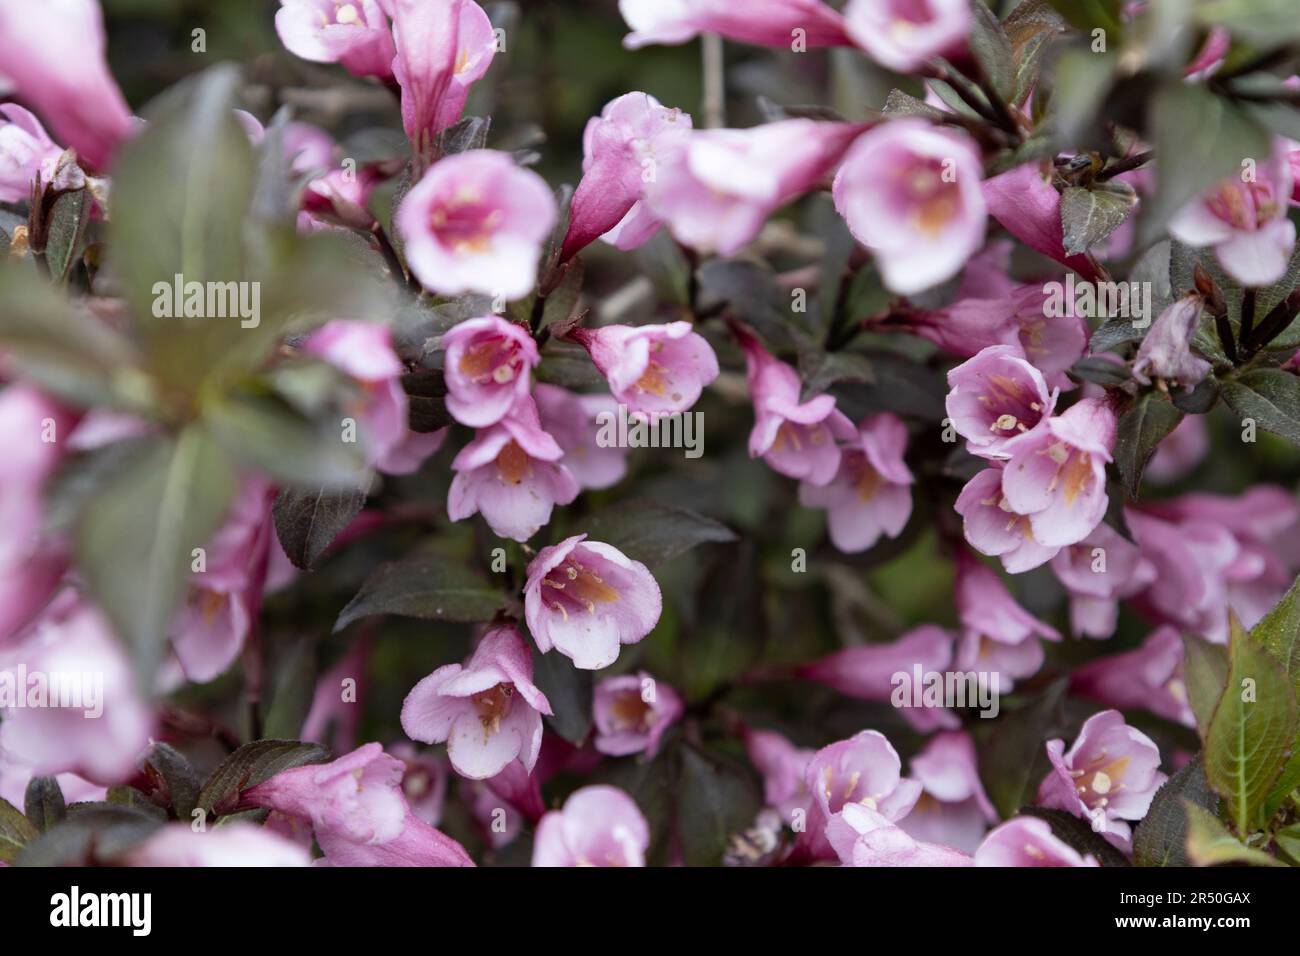 Beautiful flowers Weigela nana purpurea on blurry background. Amazing plant with pink flowers on the bush. Stock Photo